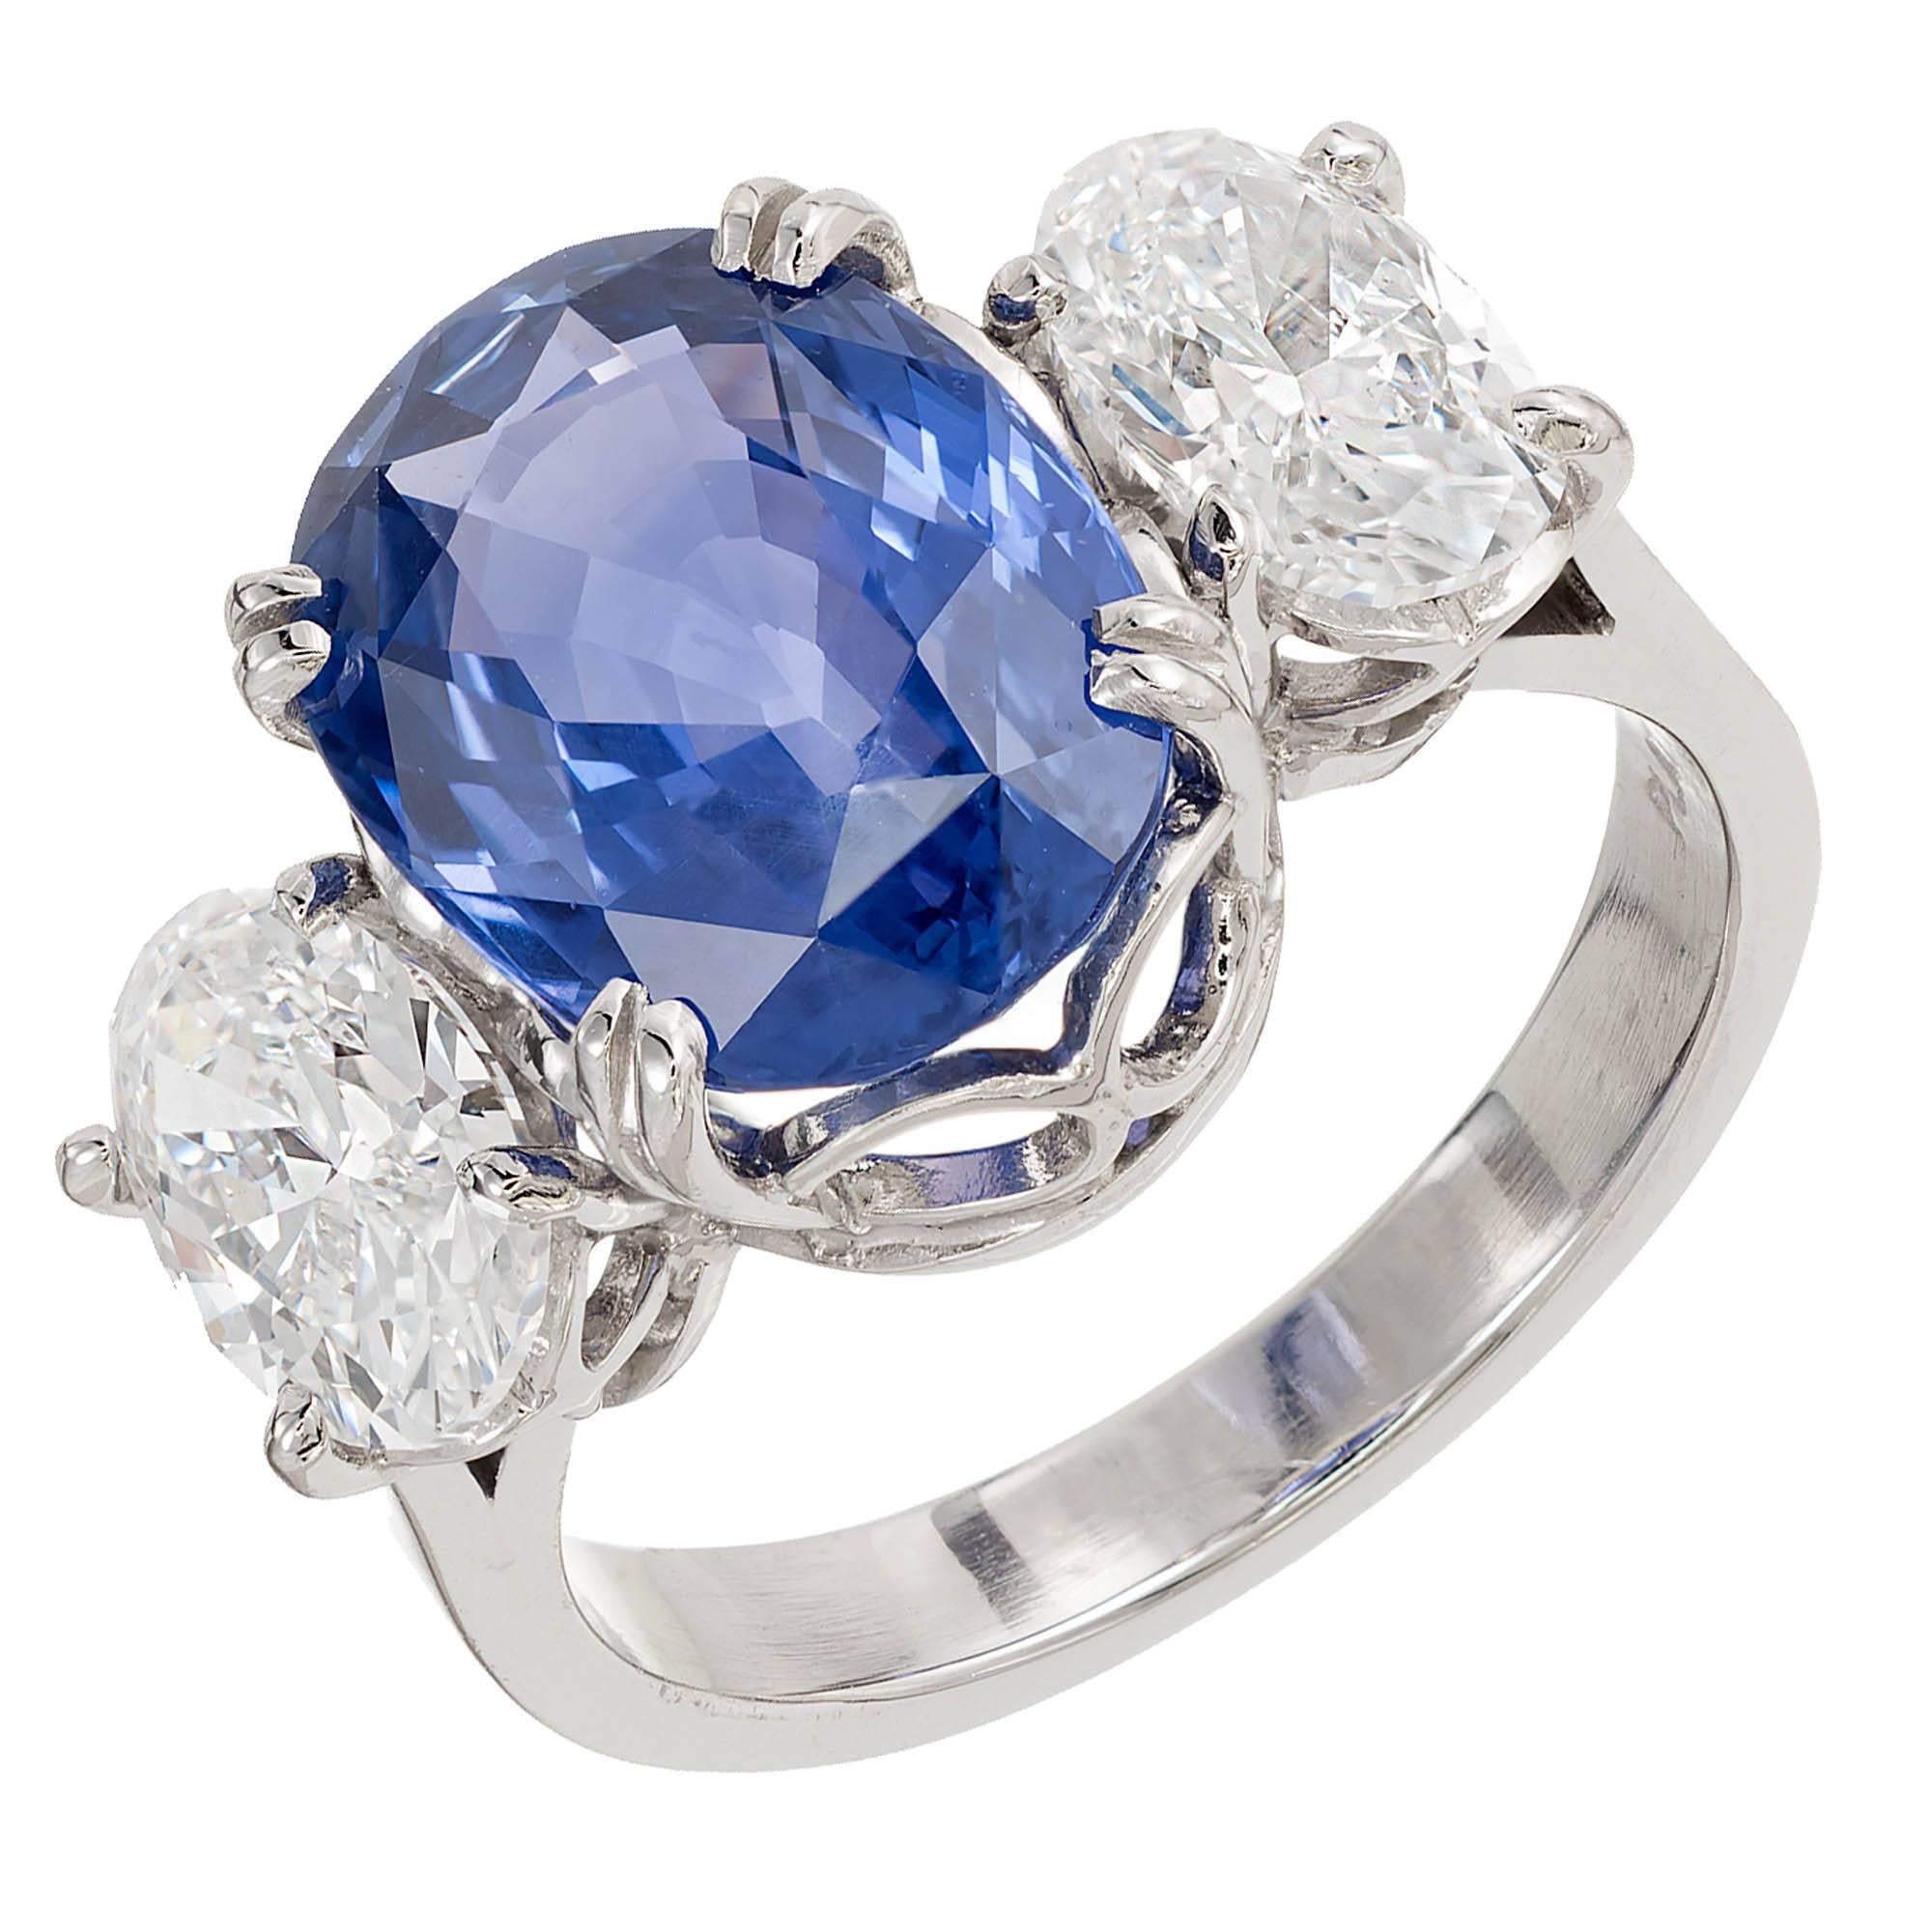 Peter Suchy 5.86 Carat Oval Violet Sapphire Diamond Platinum Engagement Ring